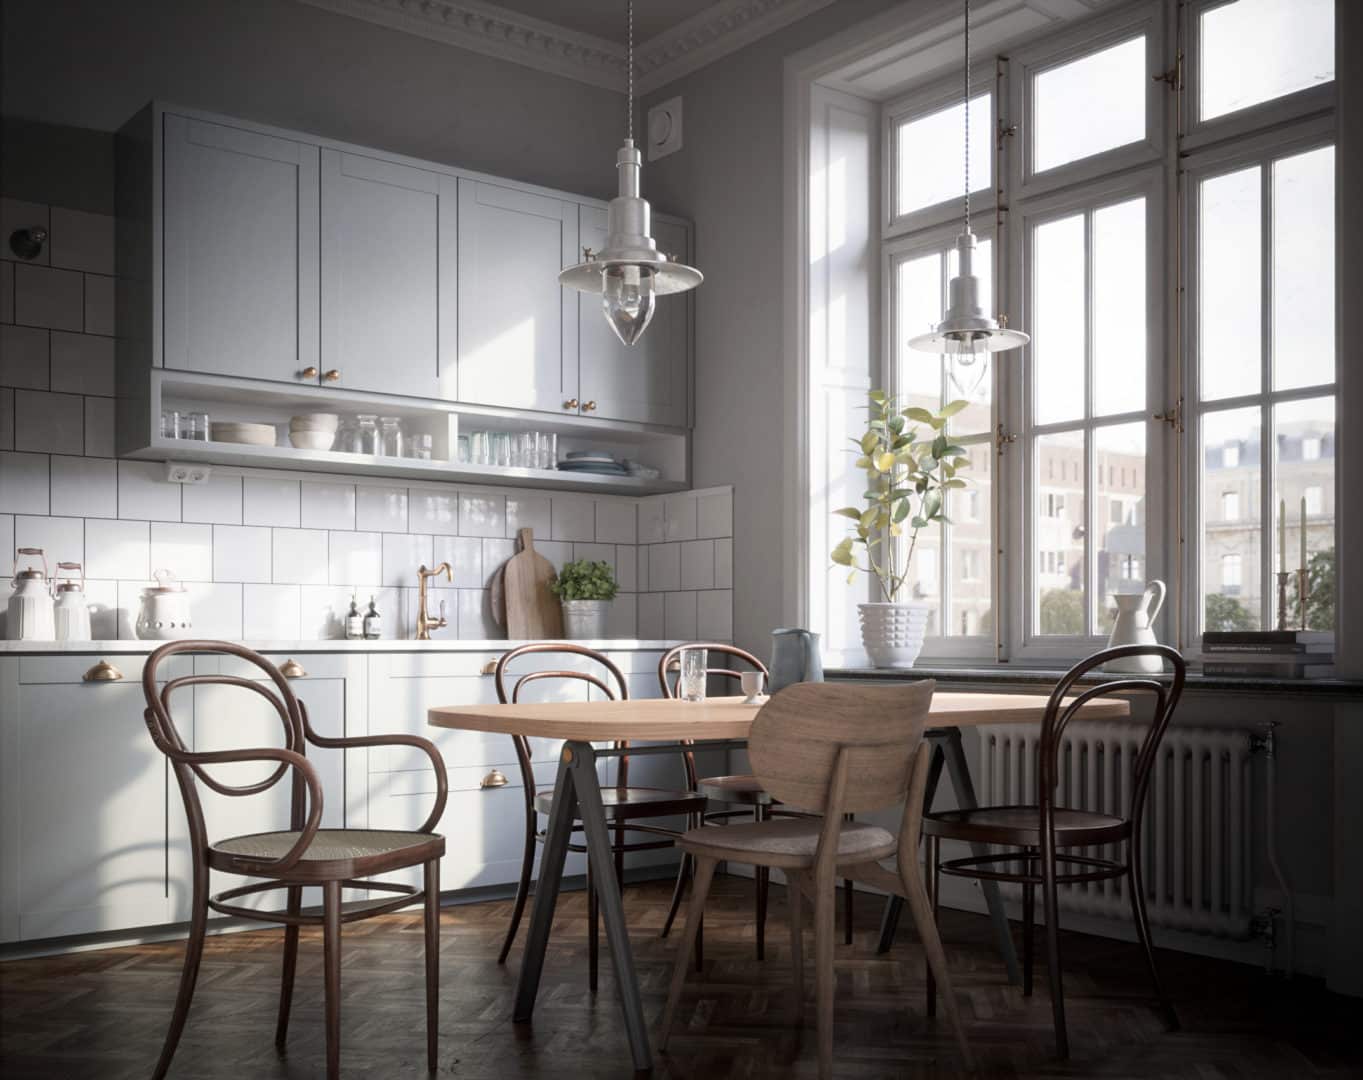 Nordic Style Kitchen - Ronen Bekerman - 3D Architectural Visualization ...